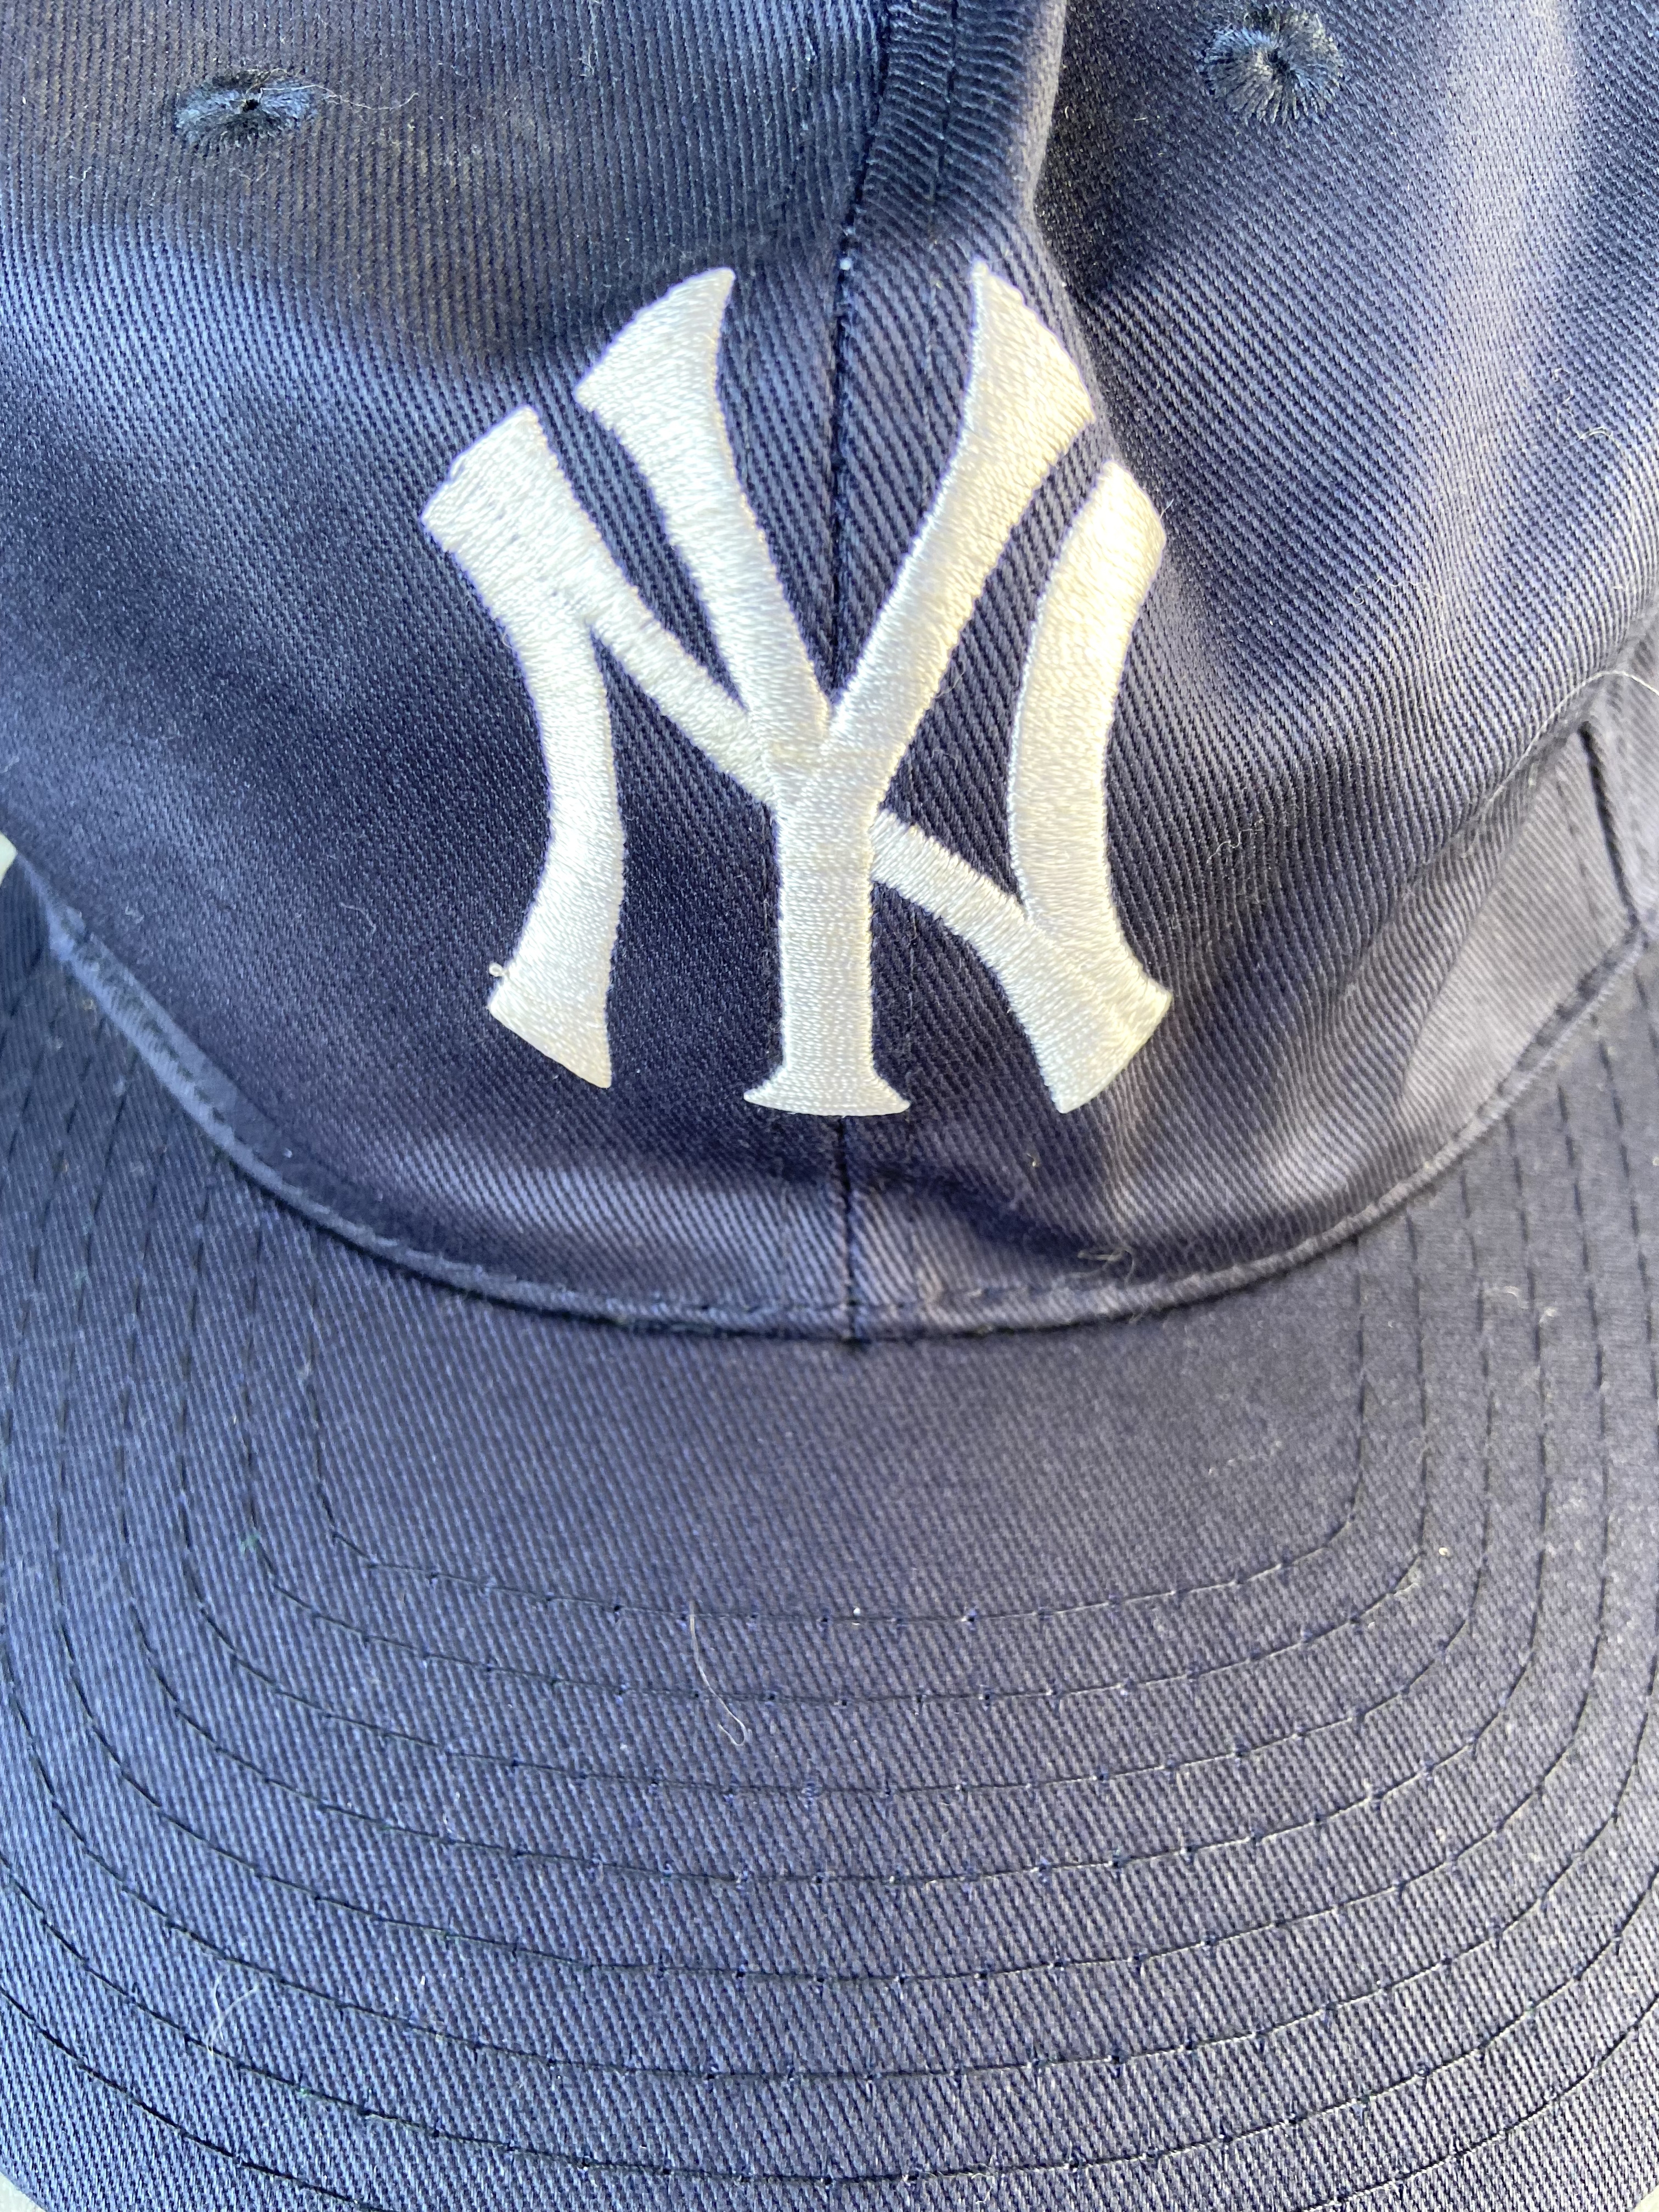 VINTAGE 90s MLB New York Yankees cap